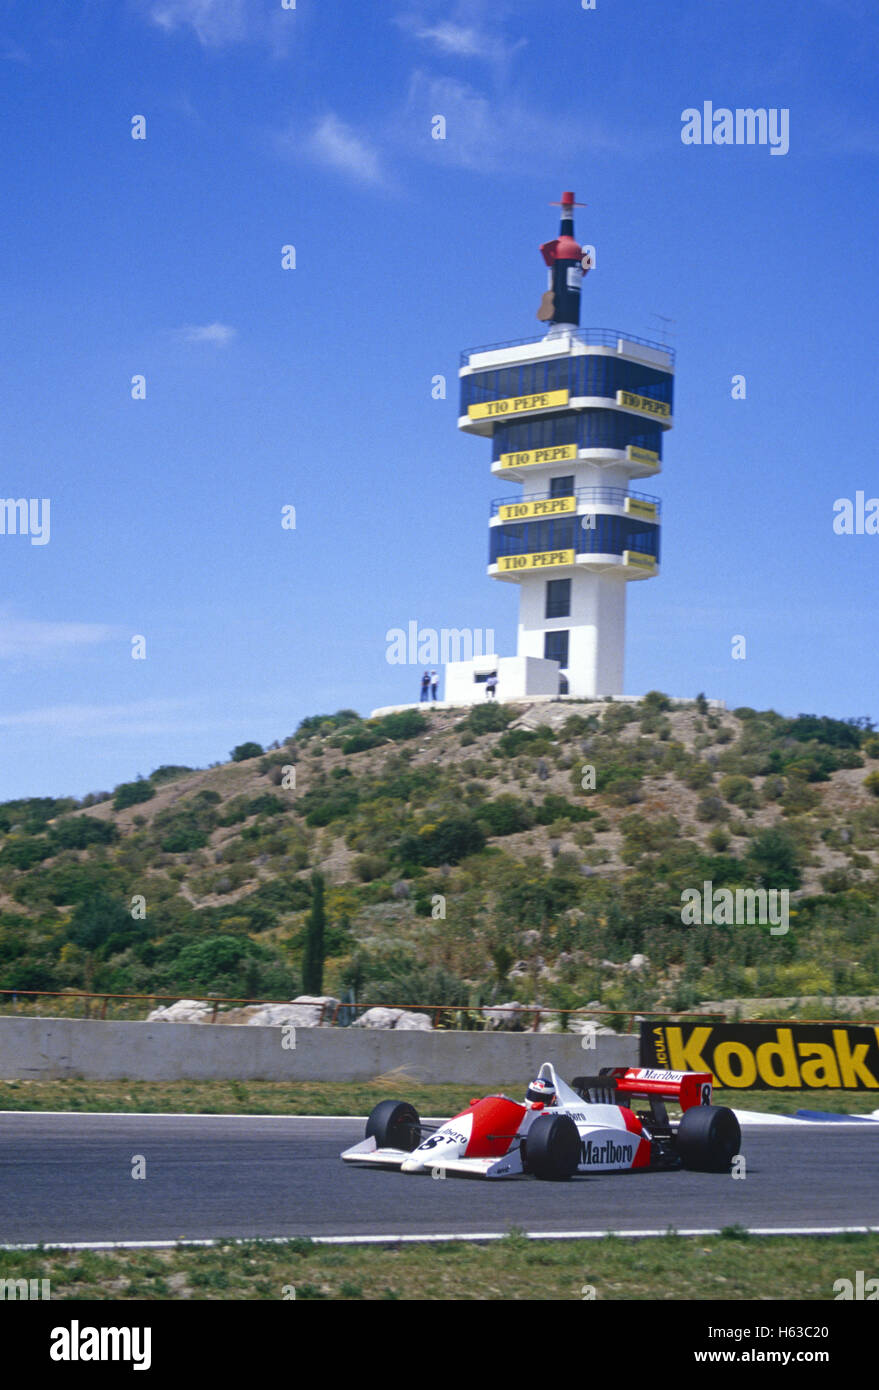 Patrick Depailler in  Marlboro Mclaren at Jerez Spain1990s Stock Photo